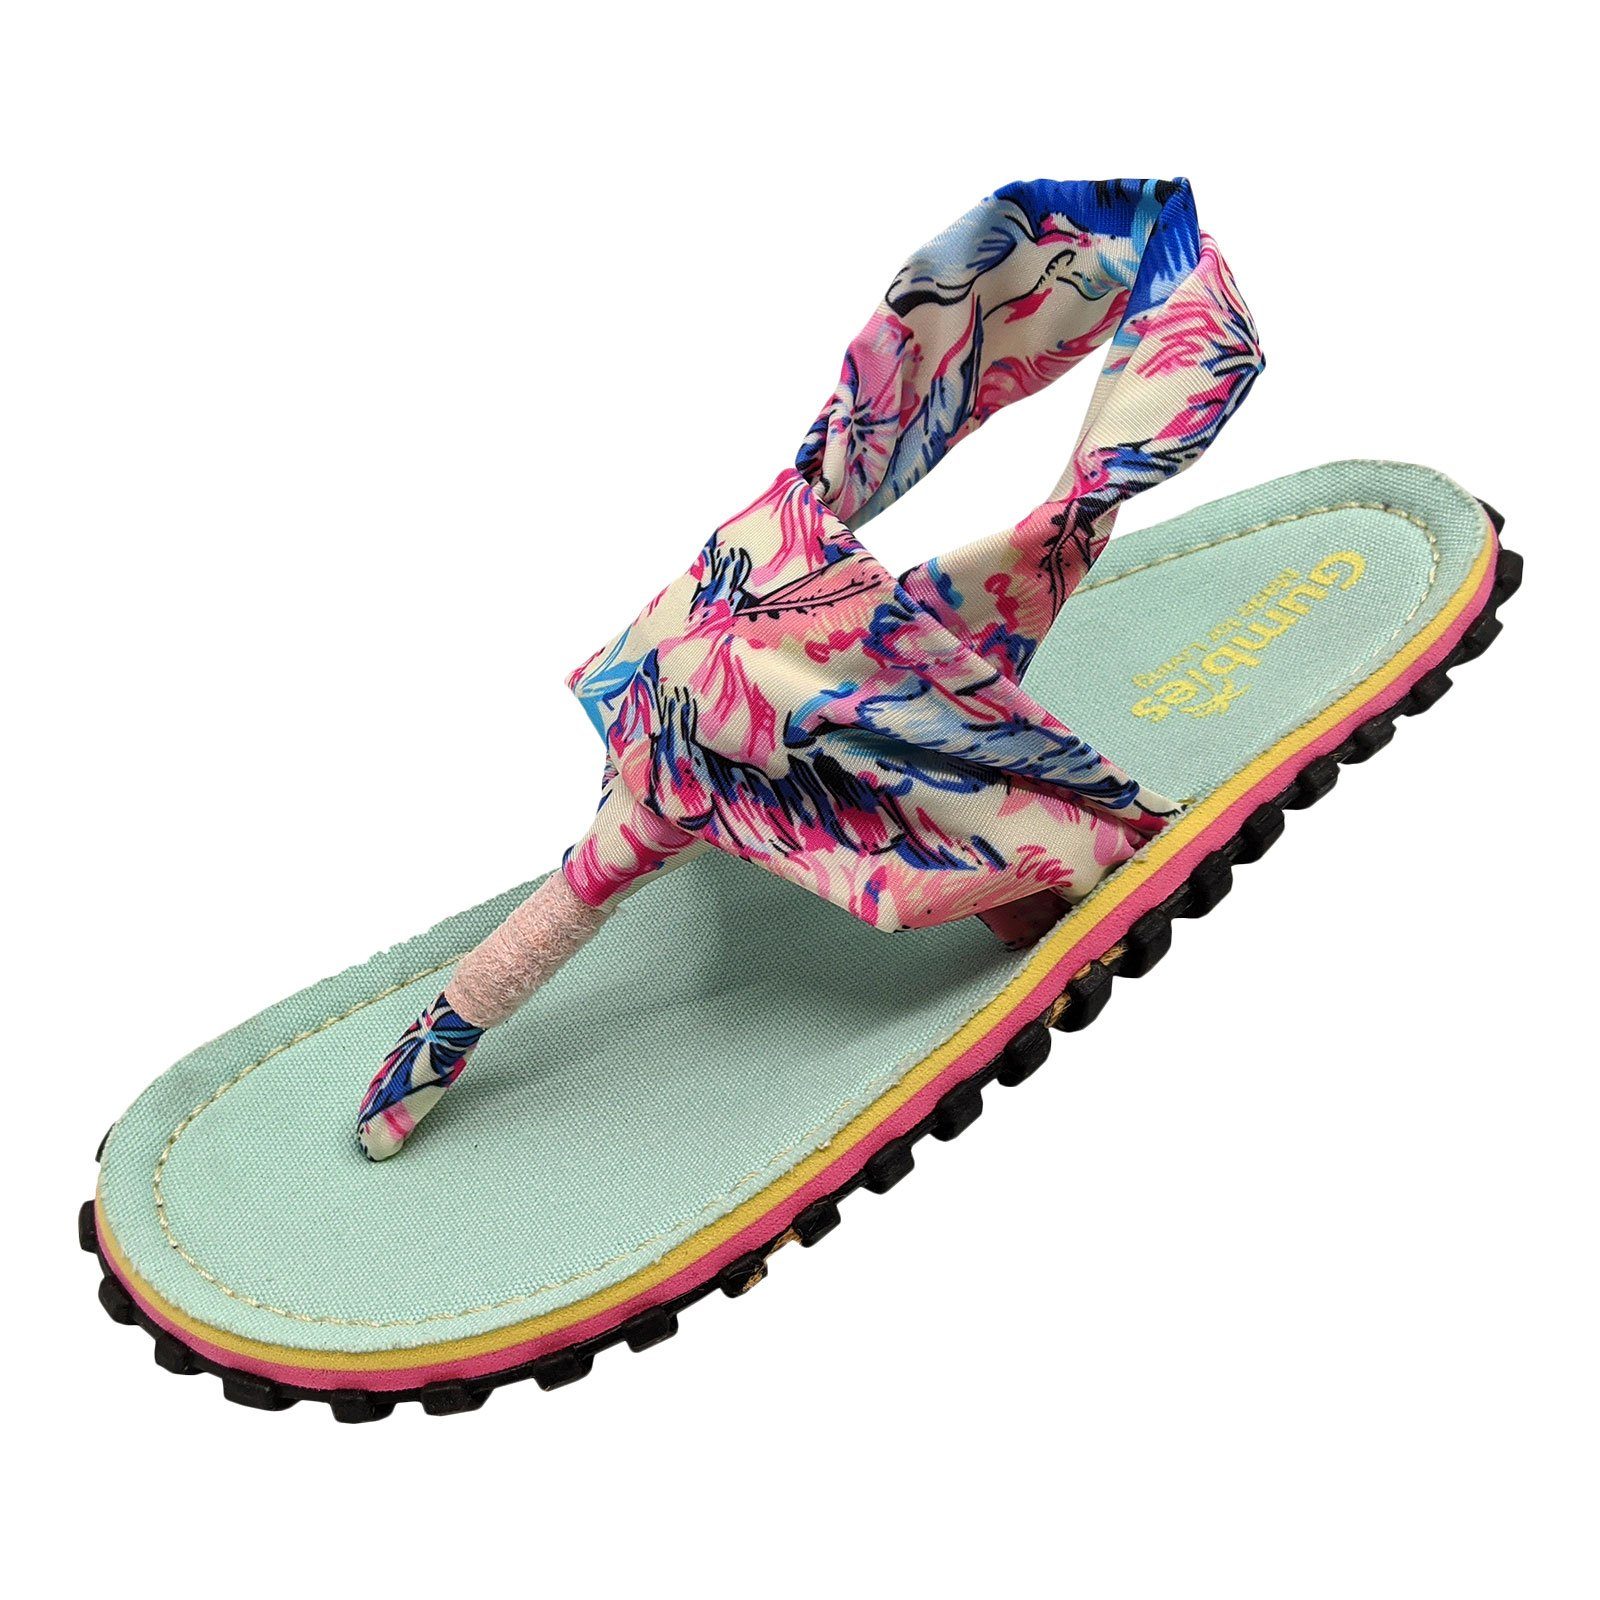 Slingback Gumbies Sandale mit mint Stoff-Riemen 2604